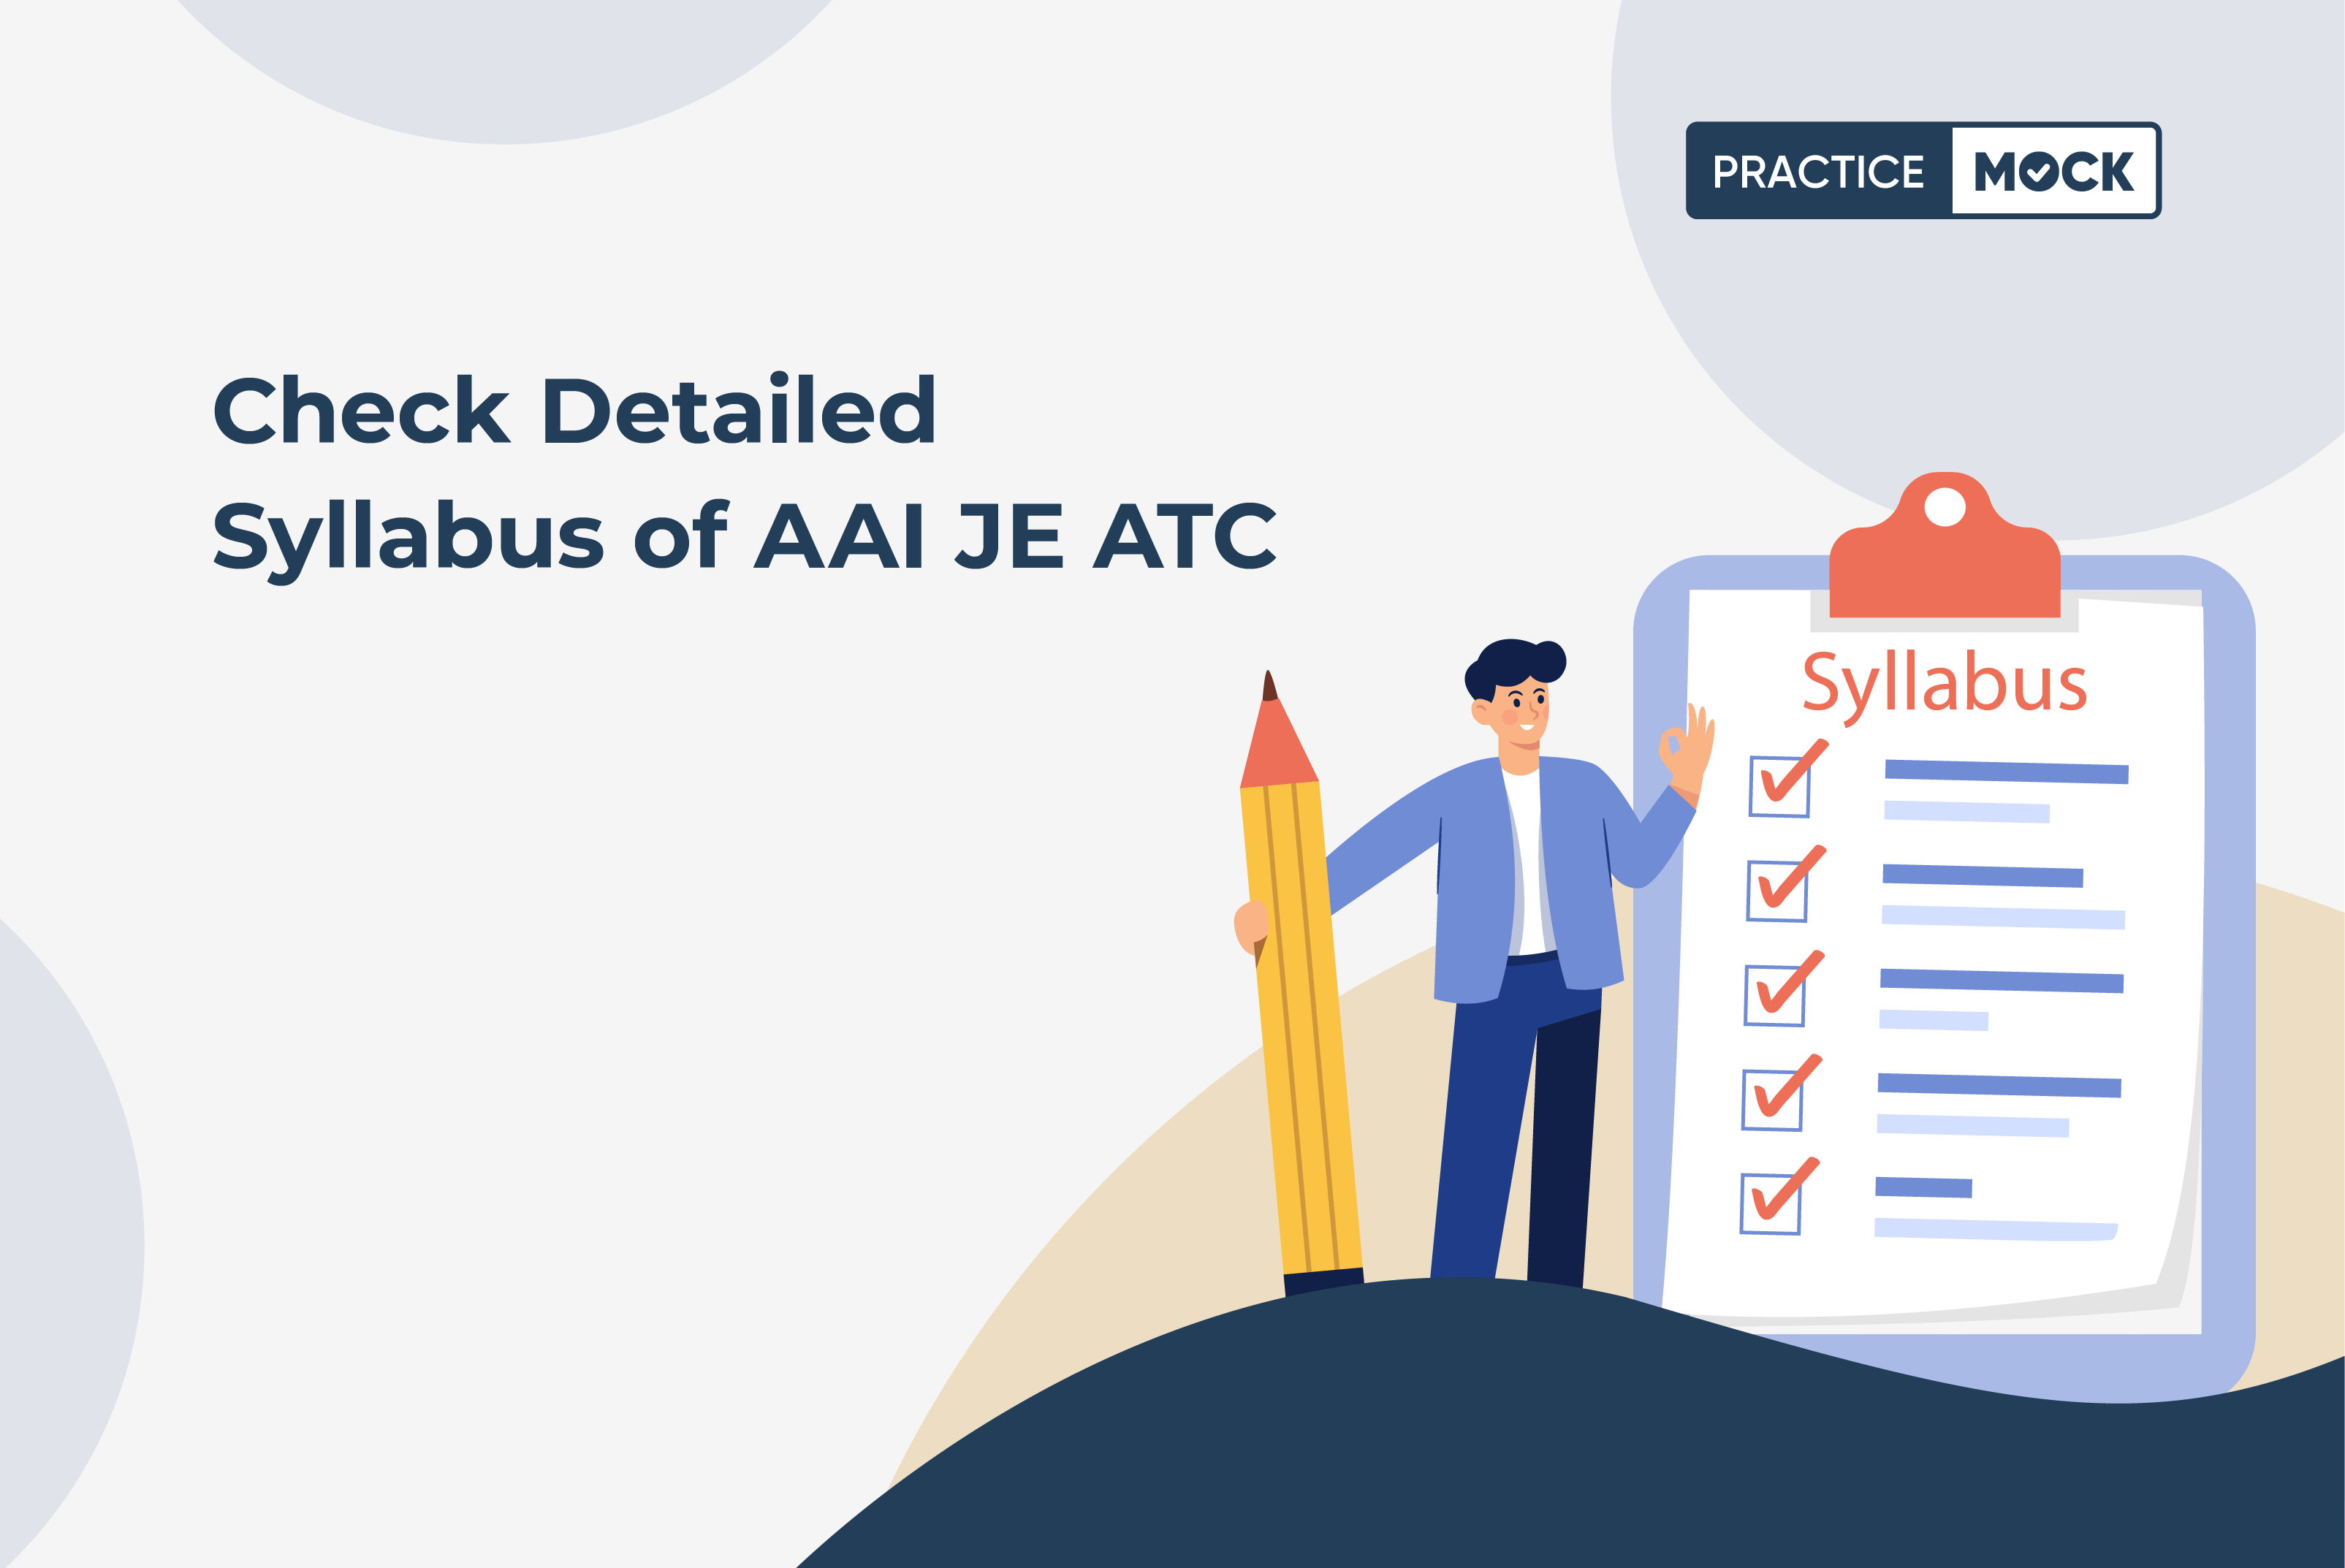 Check Detailed Syllabus of AAI JE ATC